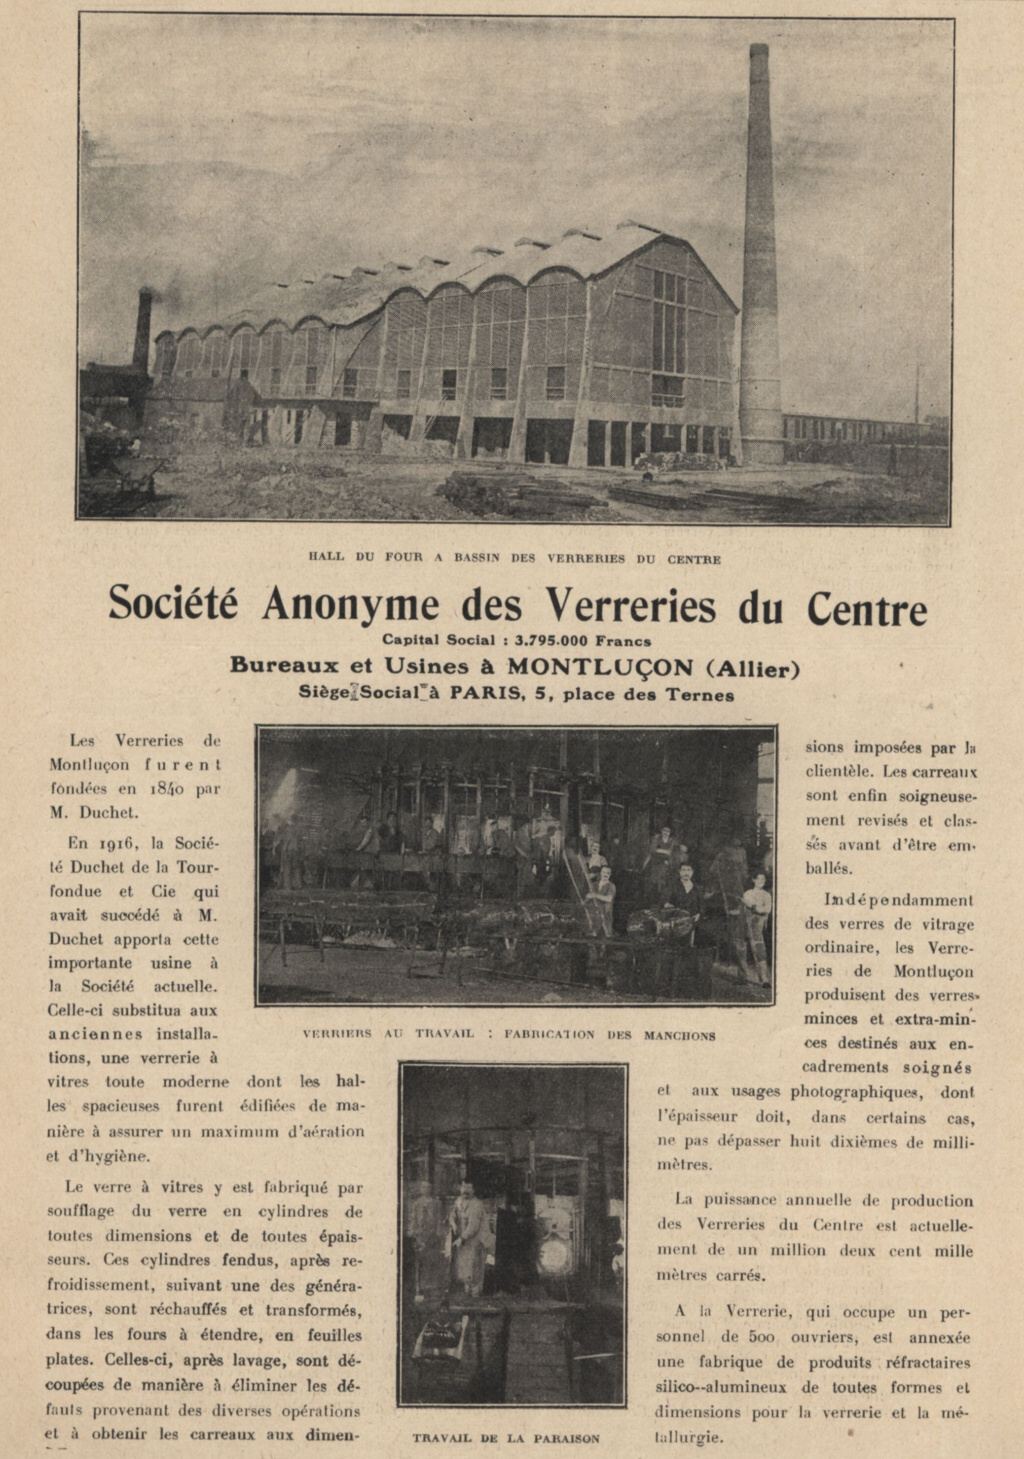 "Verreries du Centre 1925"